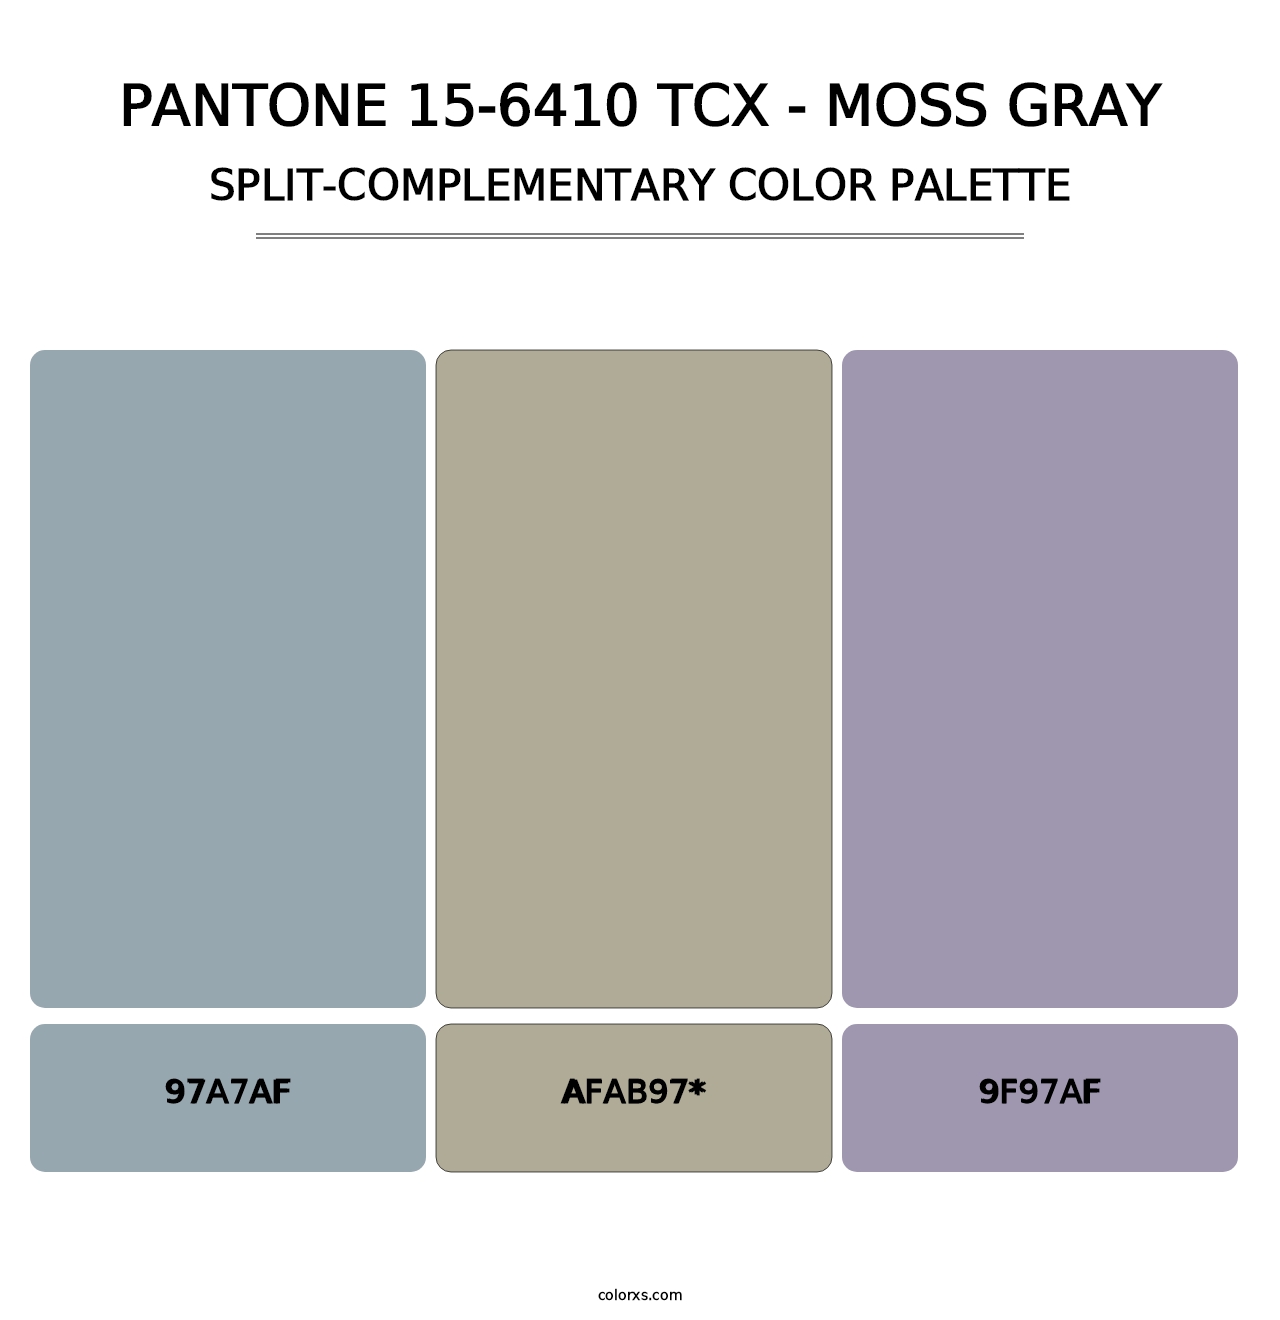 PANTONE 15-6410 TCX - Moss Gray - Split-Complementary Color Palette